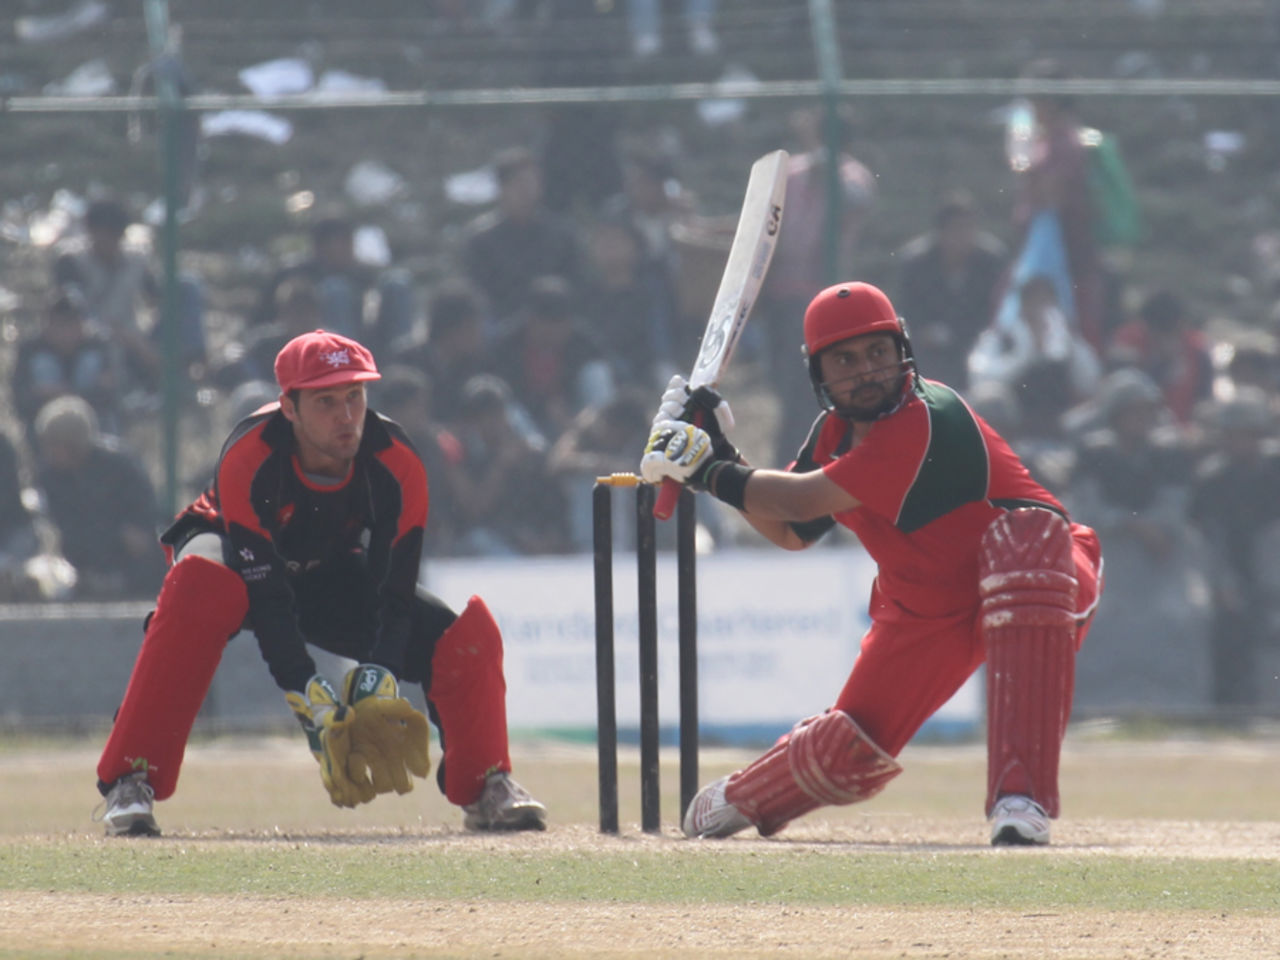 Oman's Zeeshan Siddiqui scored 42 against Hong Kong during the ACC Twenty20 Cup 2011 semi-final played in Kathmandu on 9th December 2011